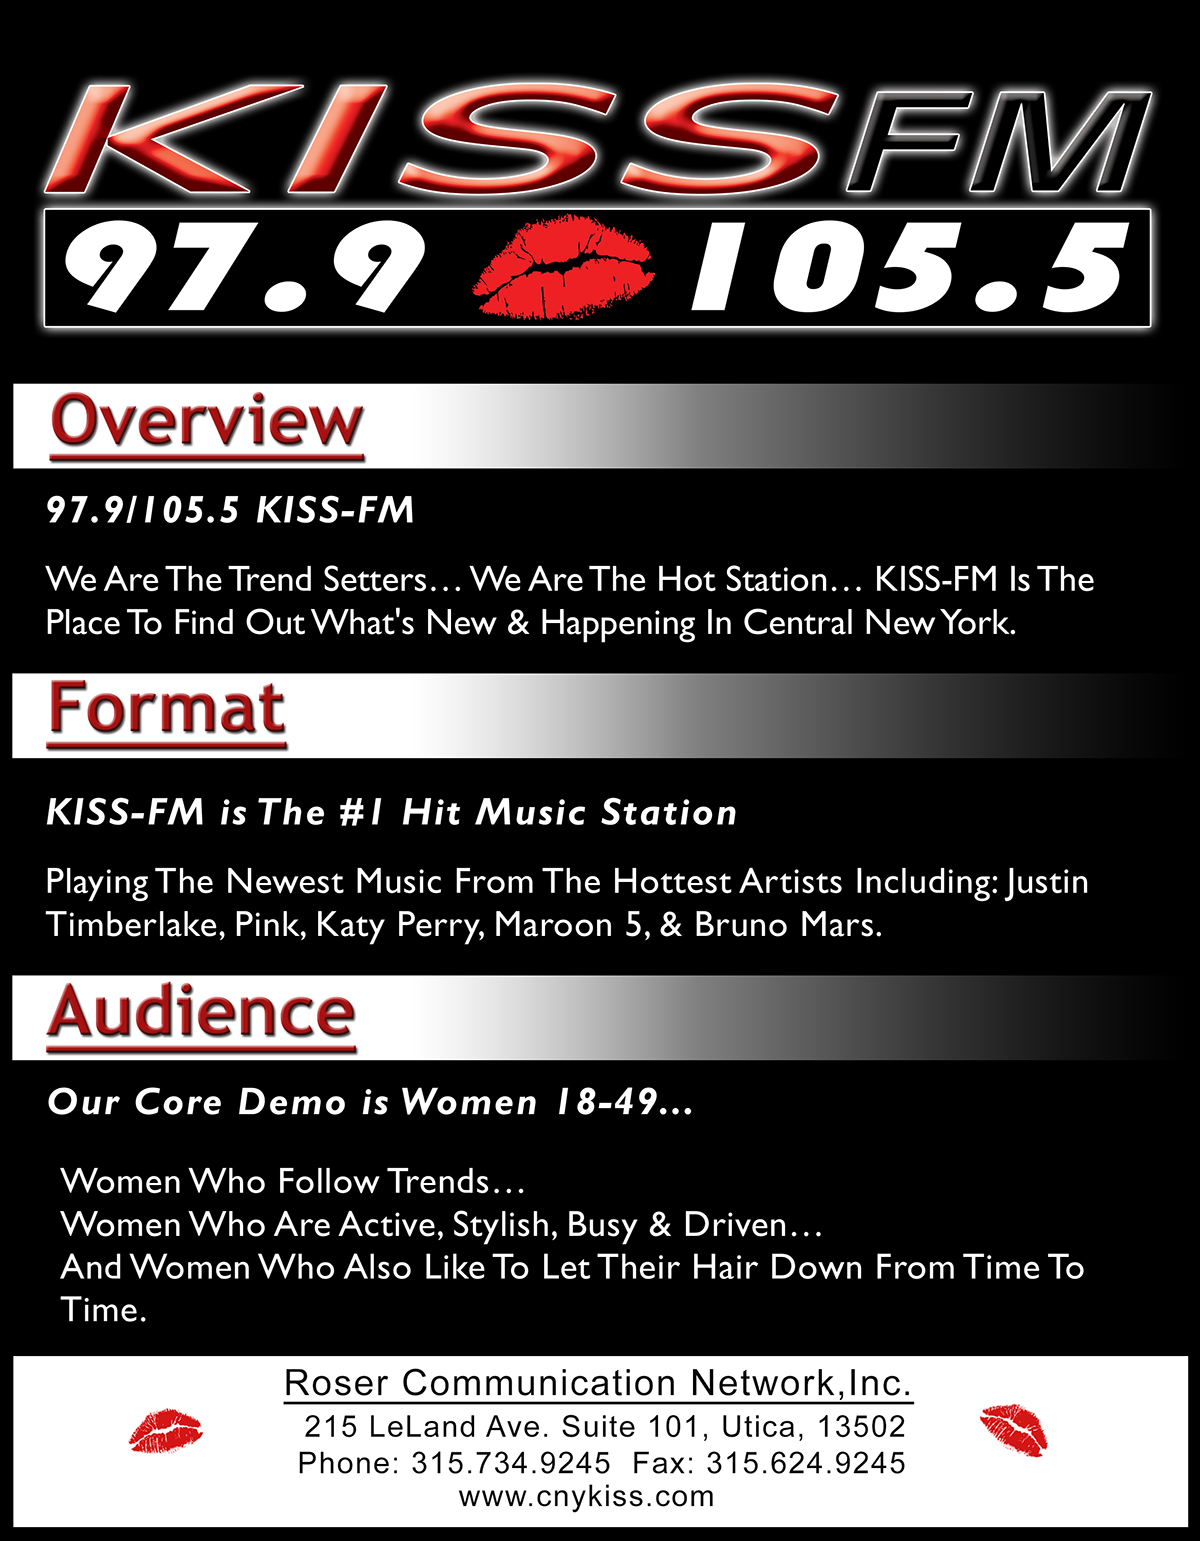 KISS-FM Overview